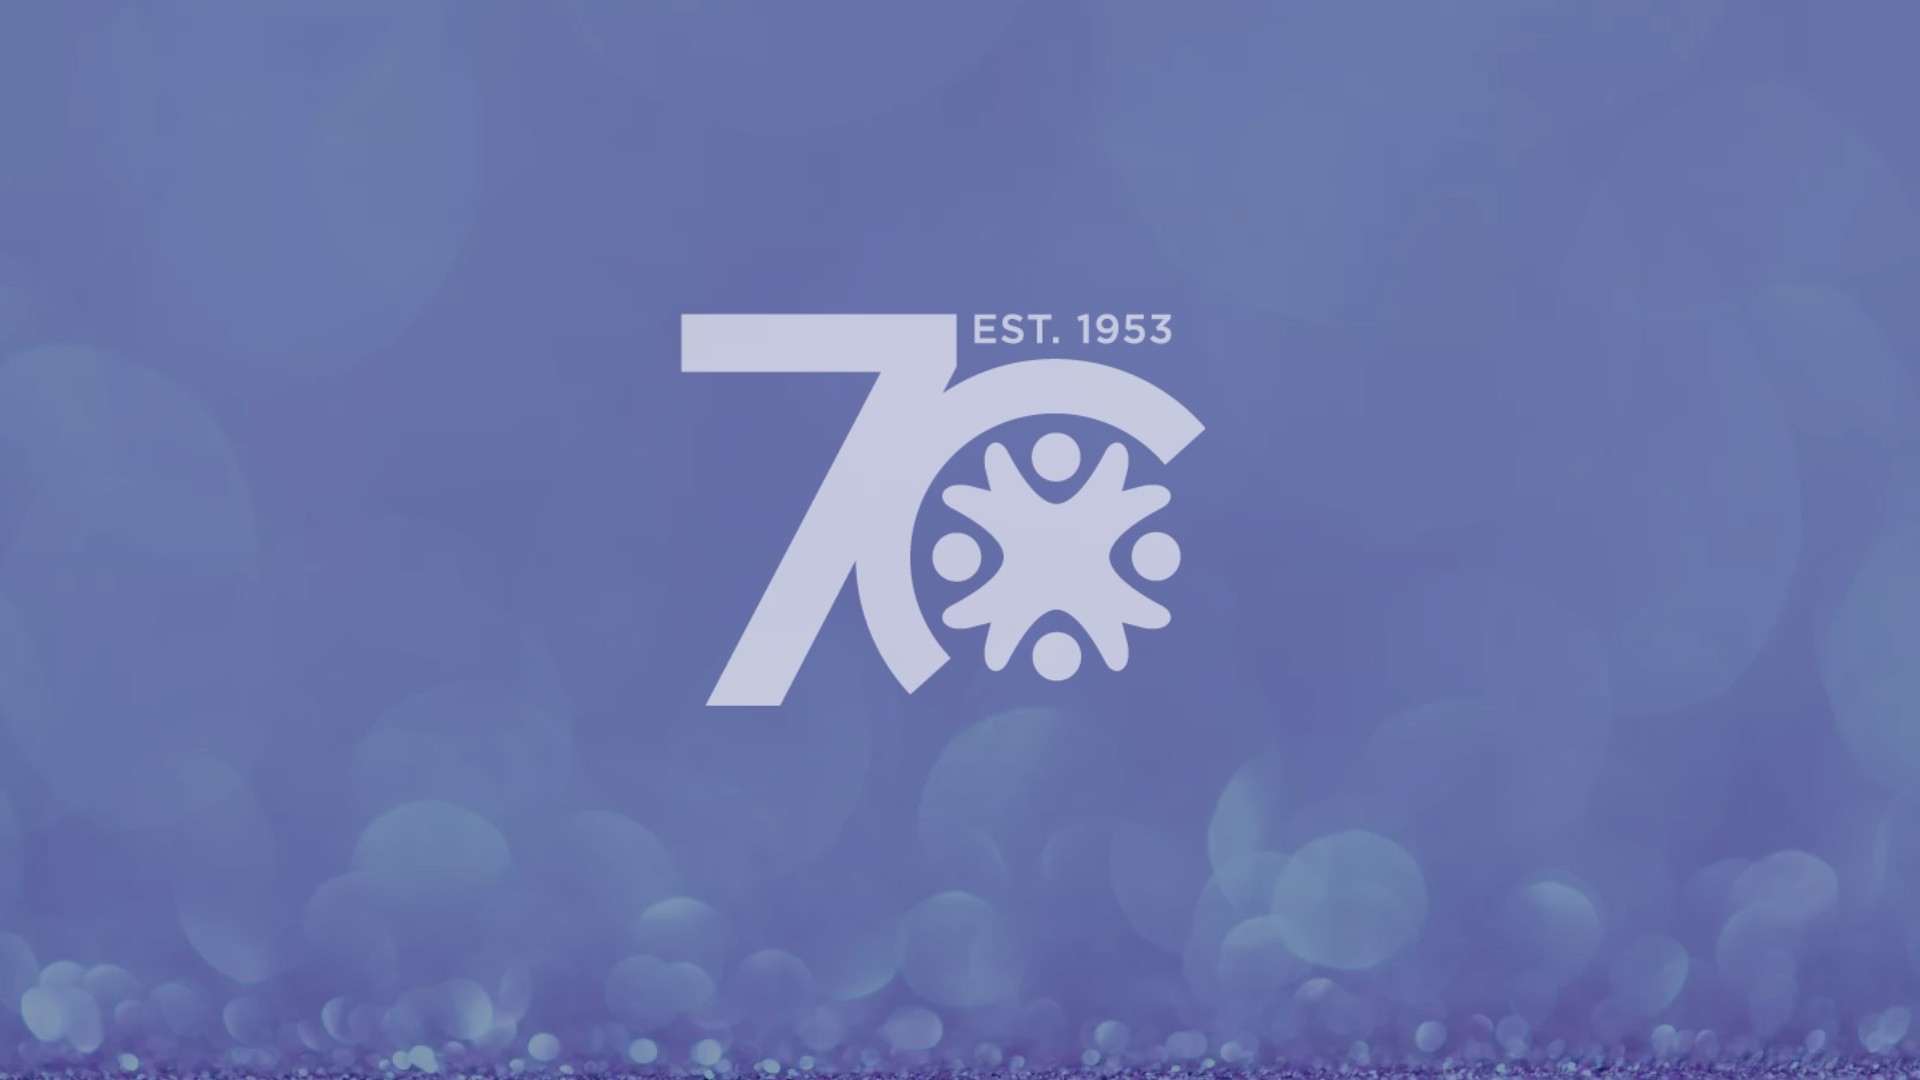 70th anniversary background